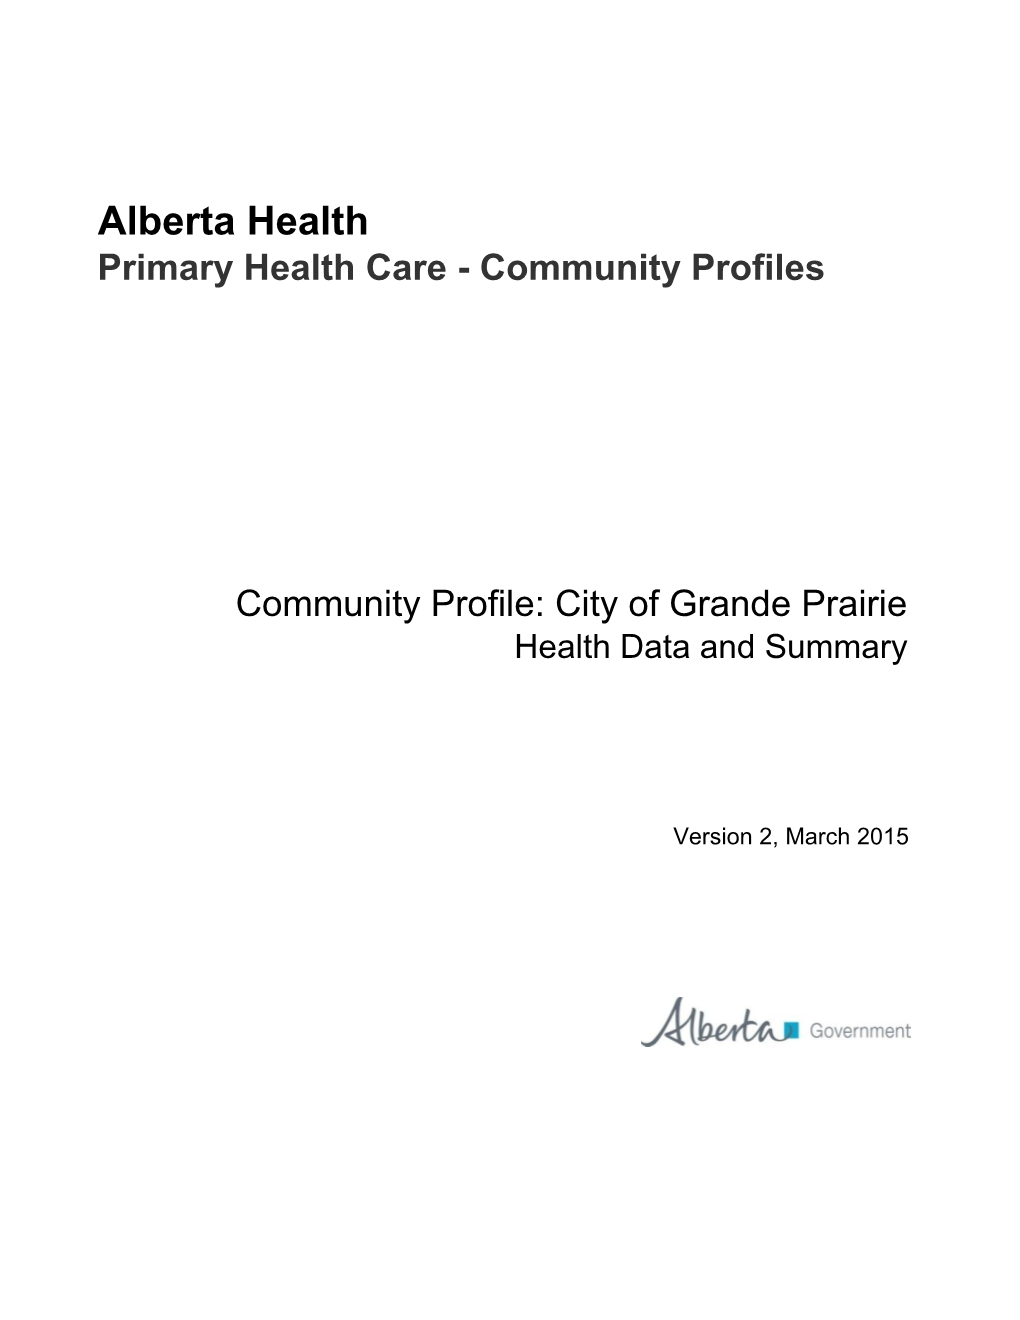 City of Grande Prairie Health Data and Summary